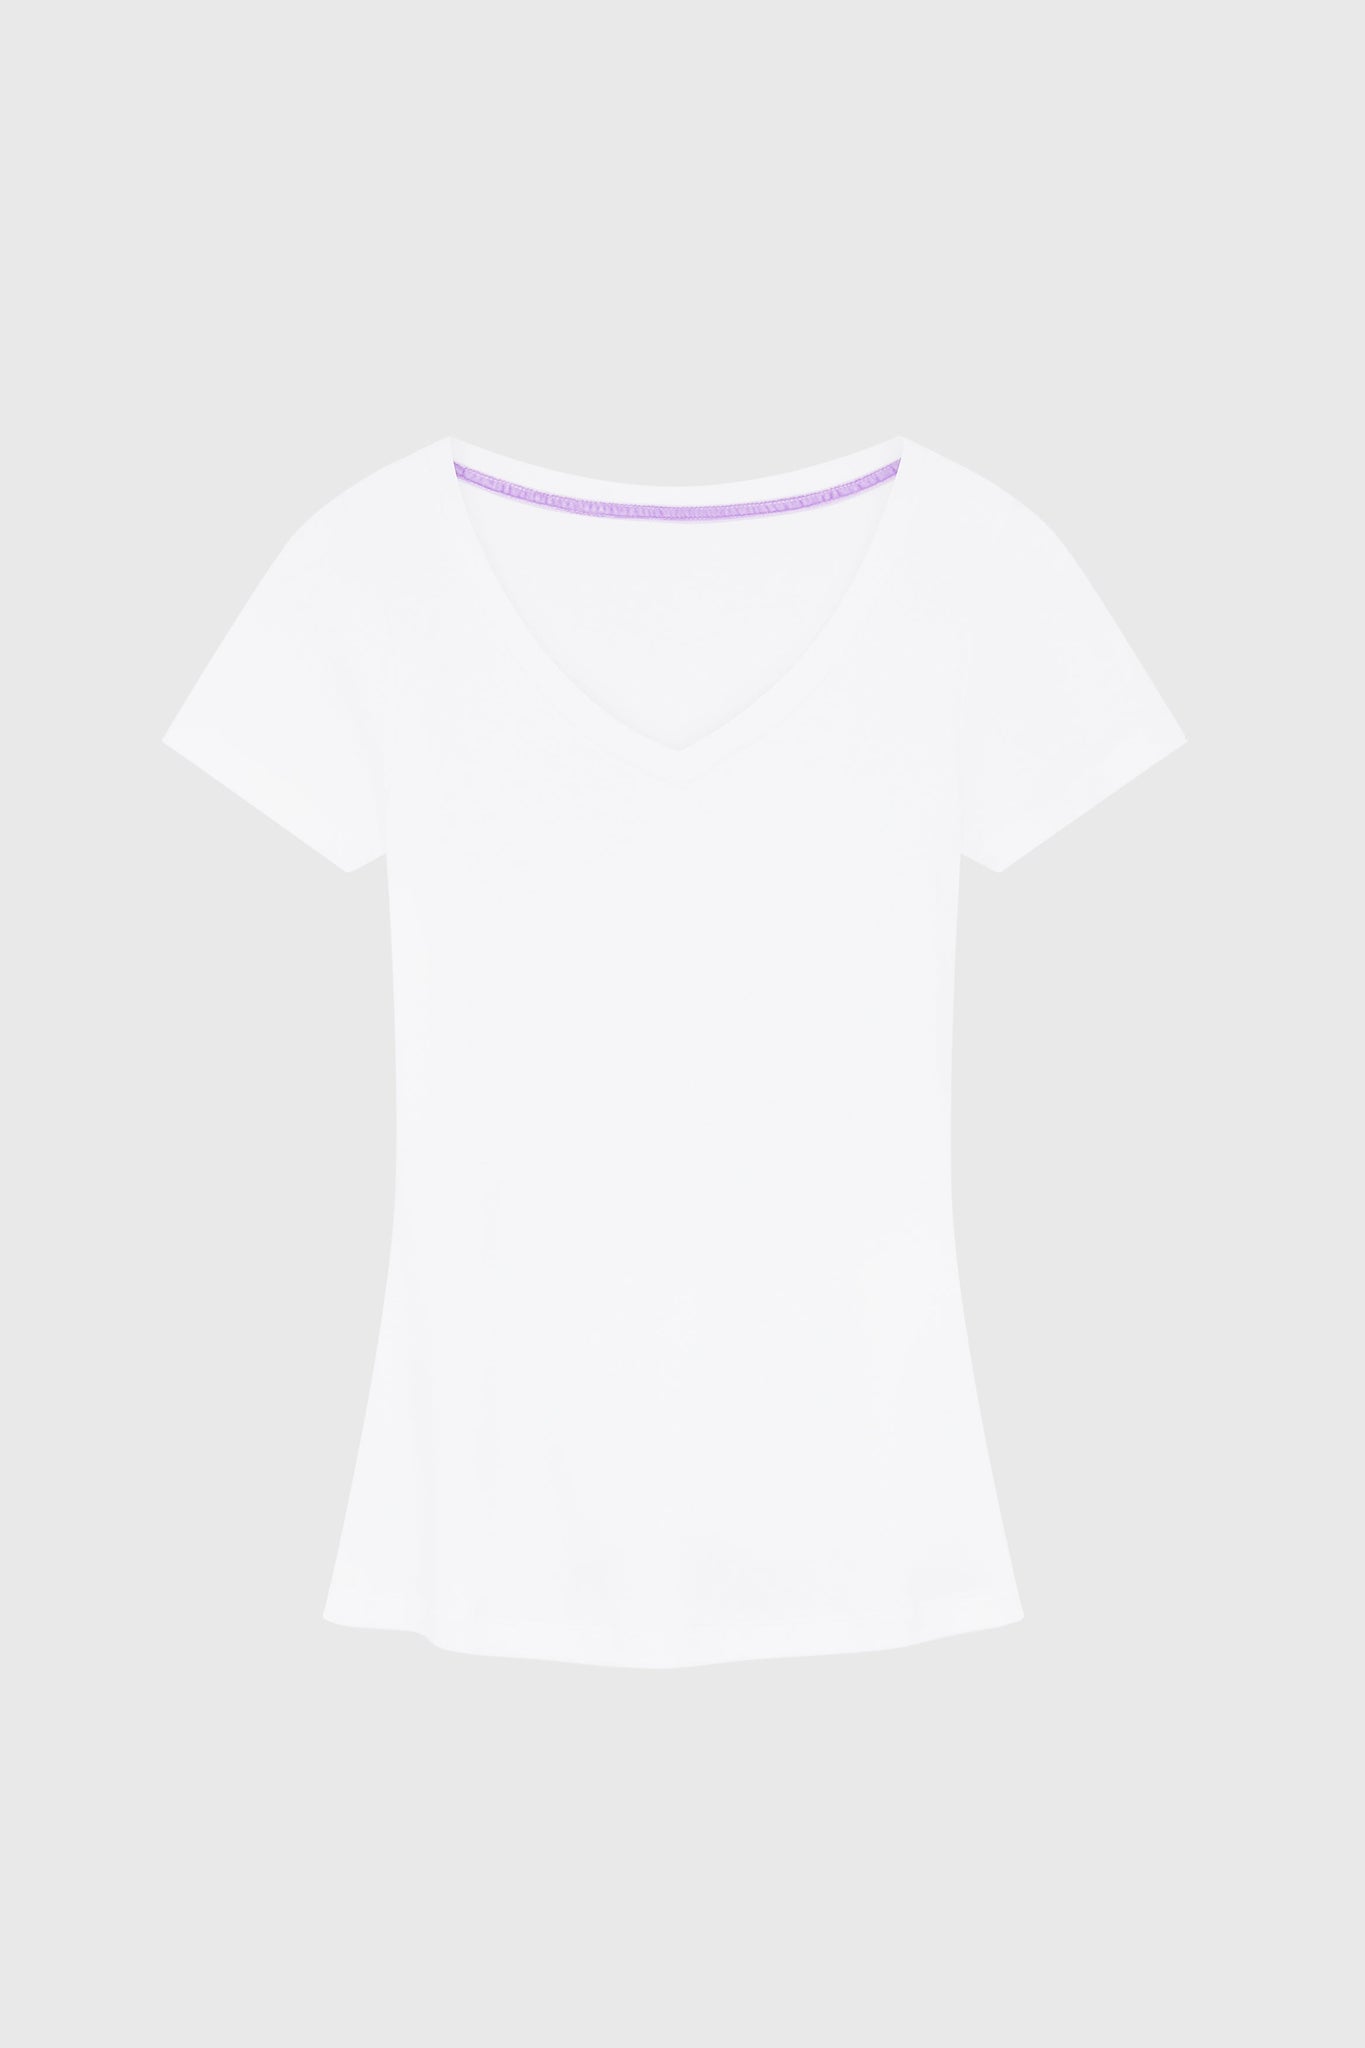 V Neck Cotton Modal Blend T-shirt Women's Short Sleeve T-shirt Lavender Hill Clothing